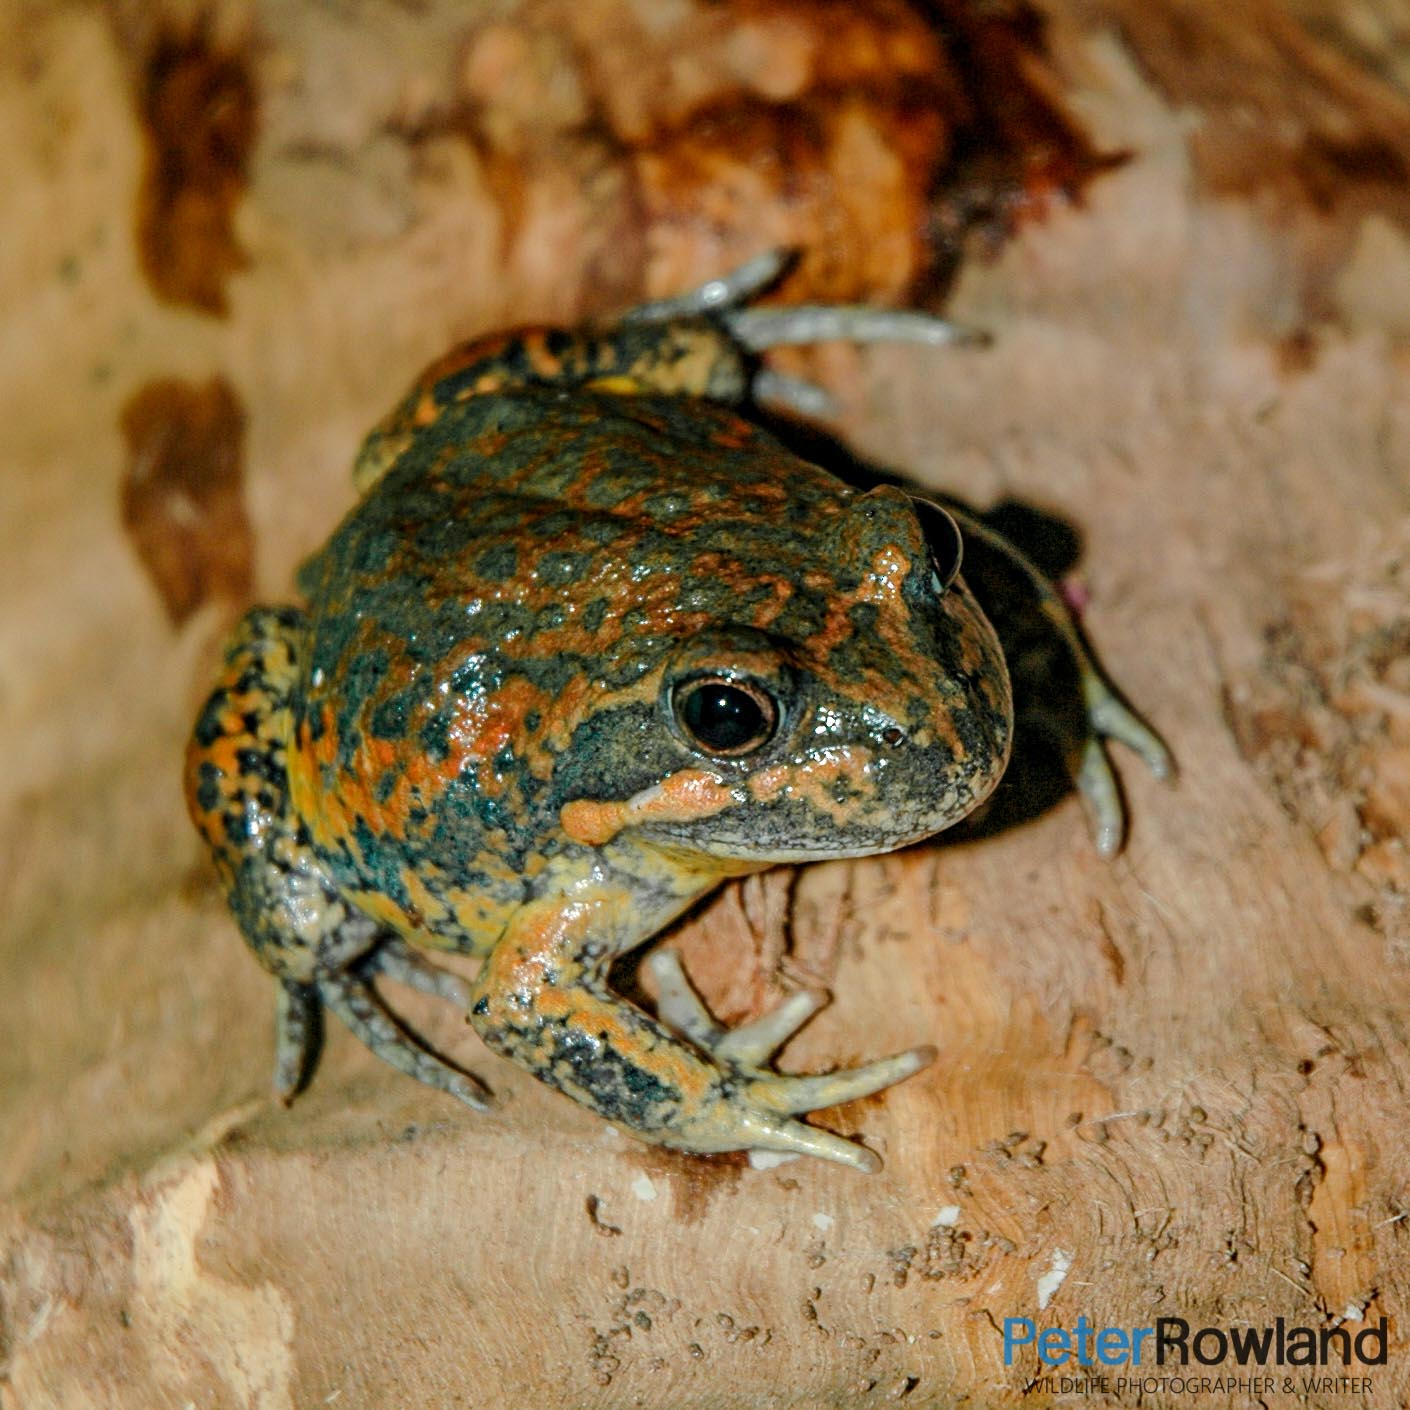 An Eastern Banjo Frog on a log